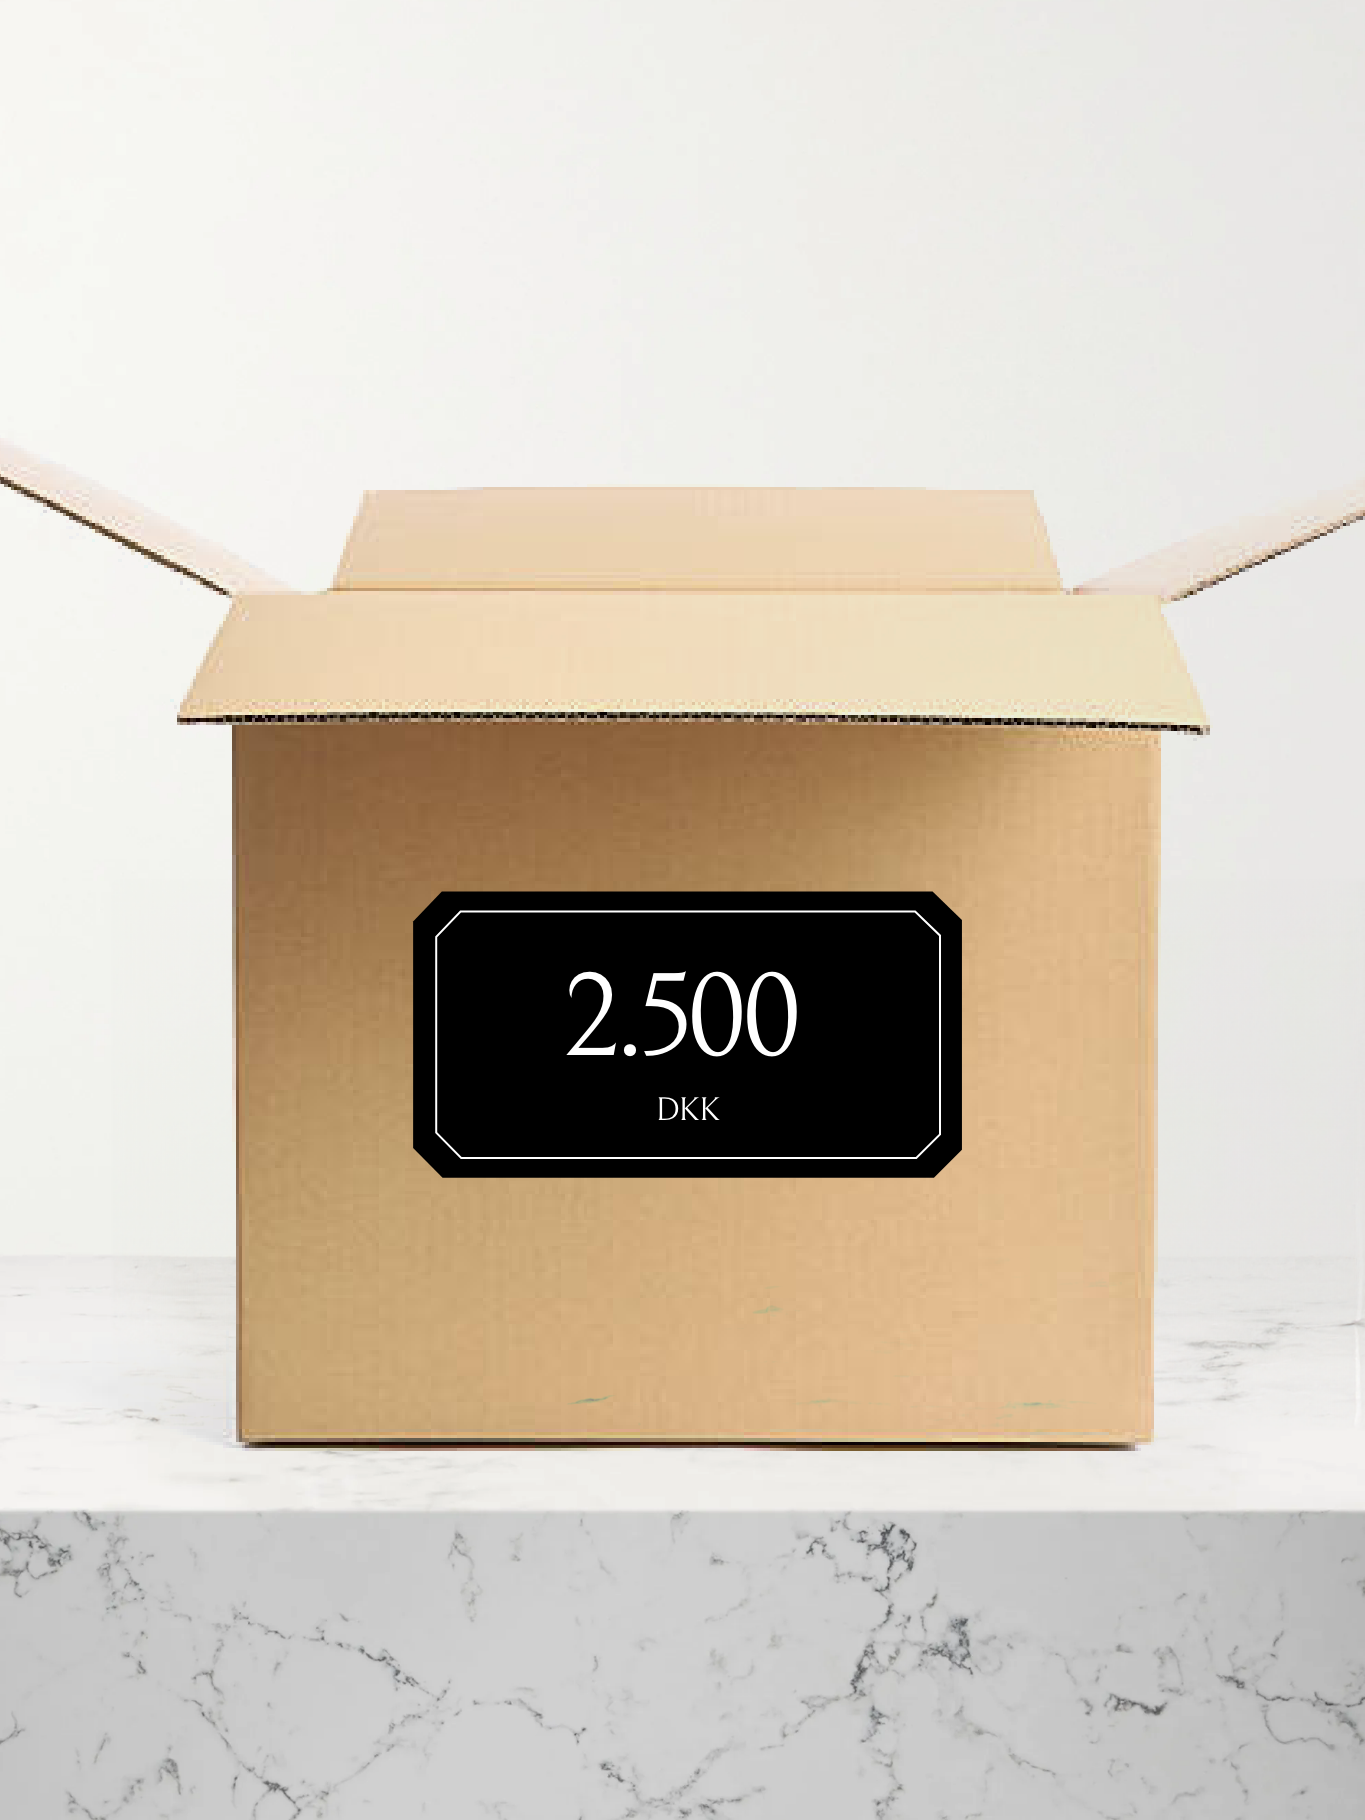 MYSTERY BOX FOR 2.500 DKK